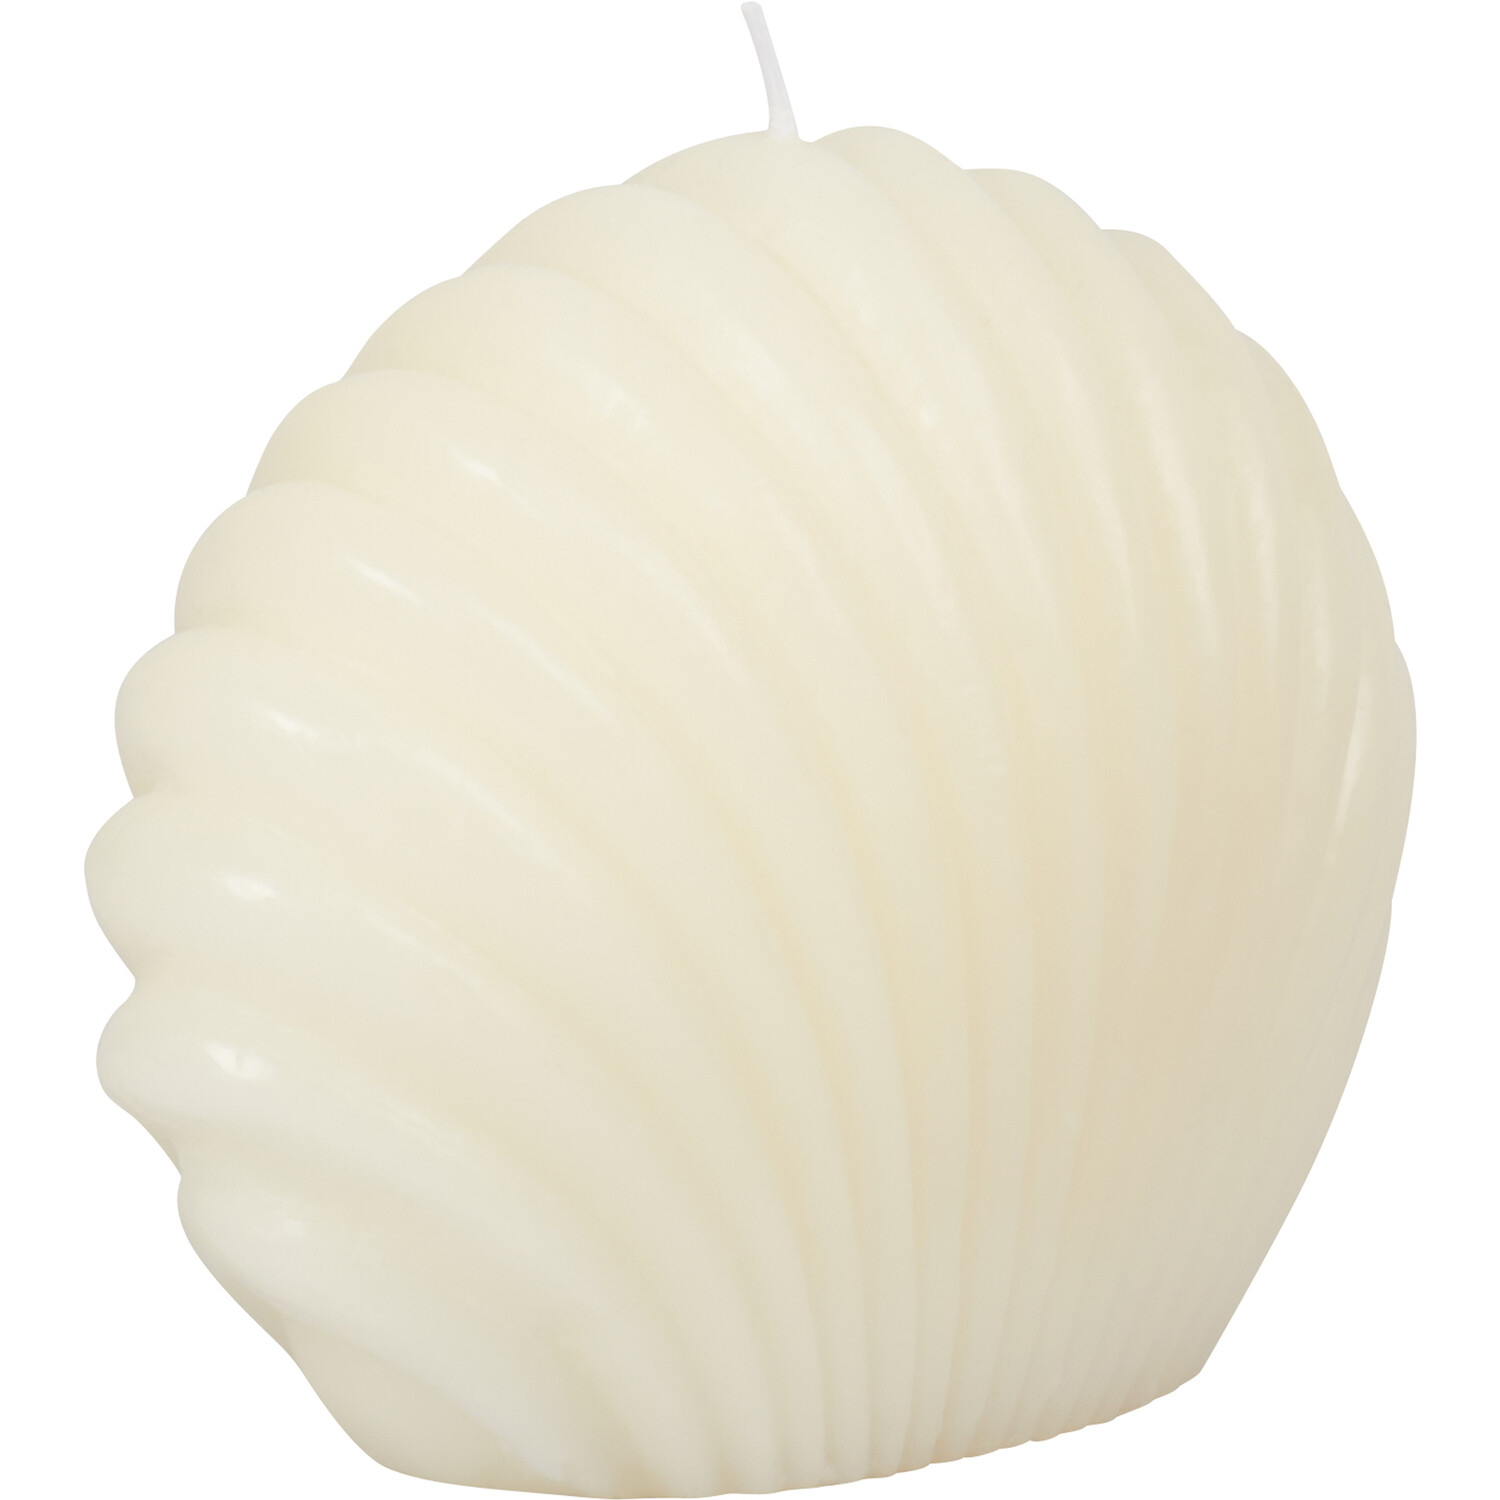 Shell Shaped Candle - White Image 2